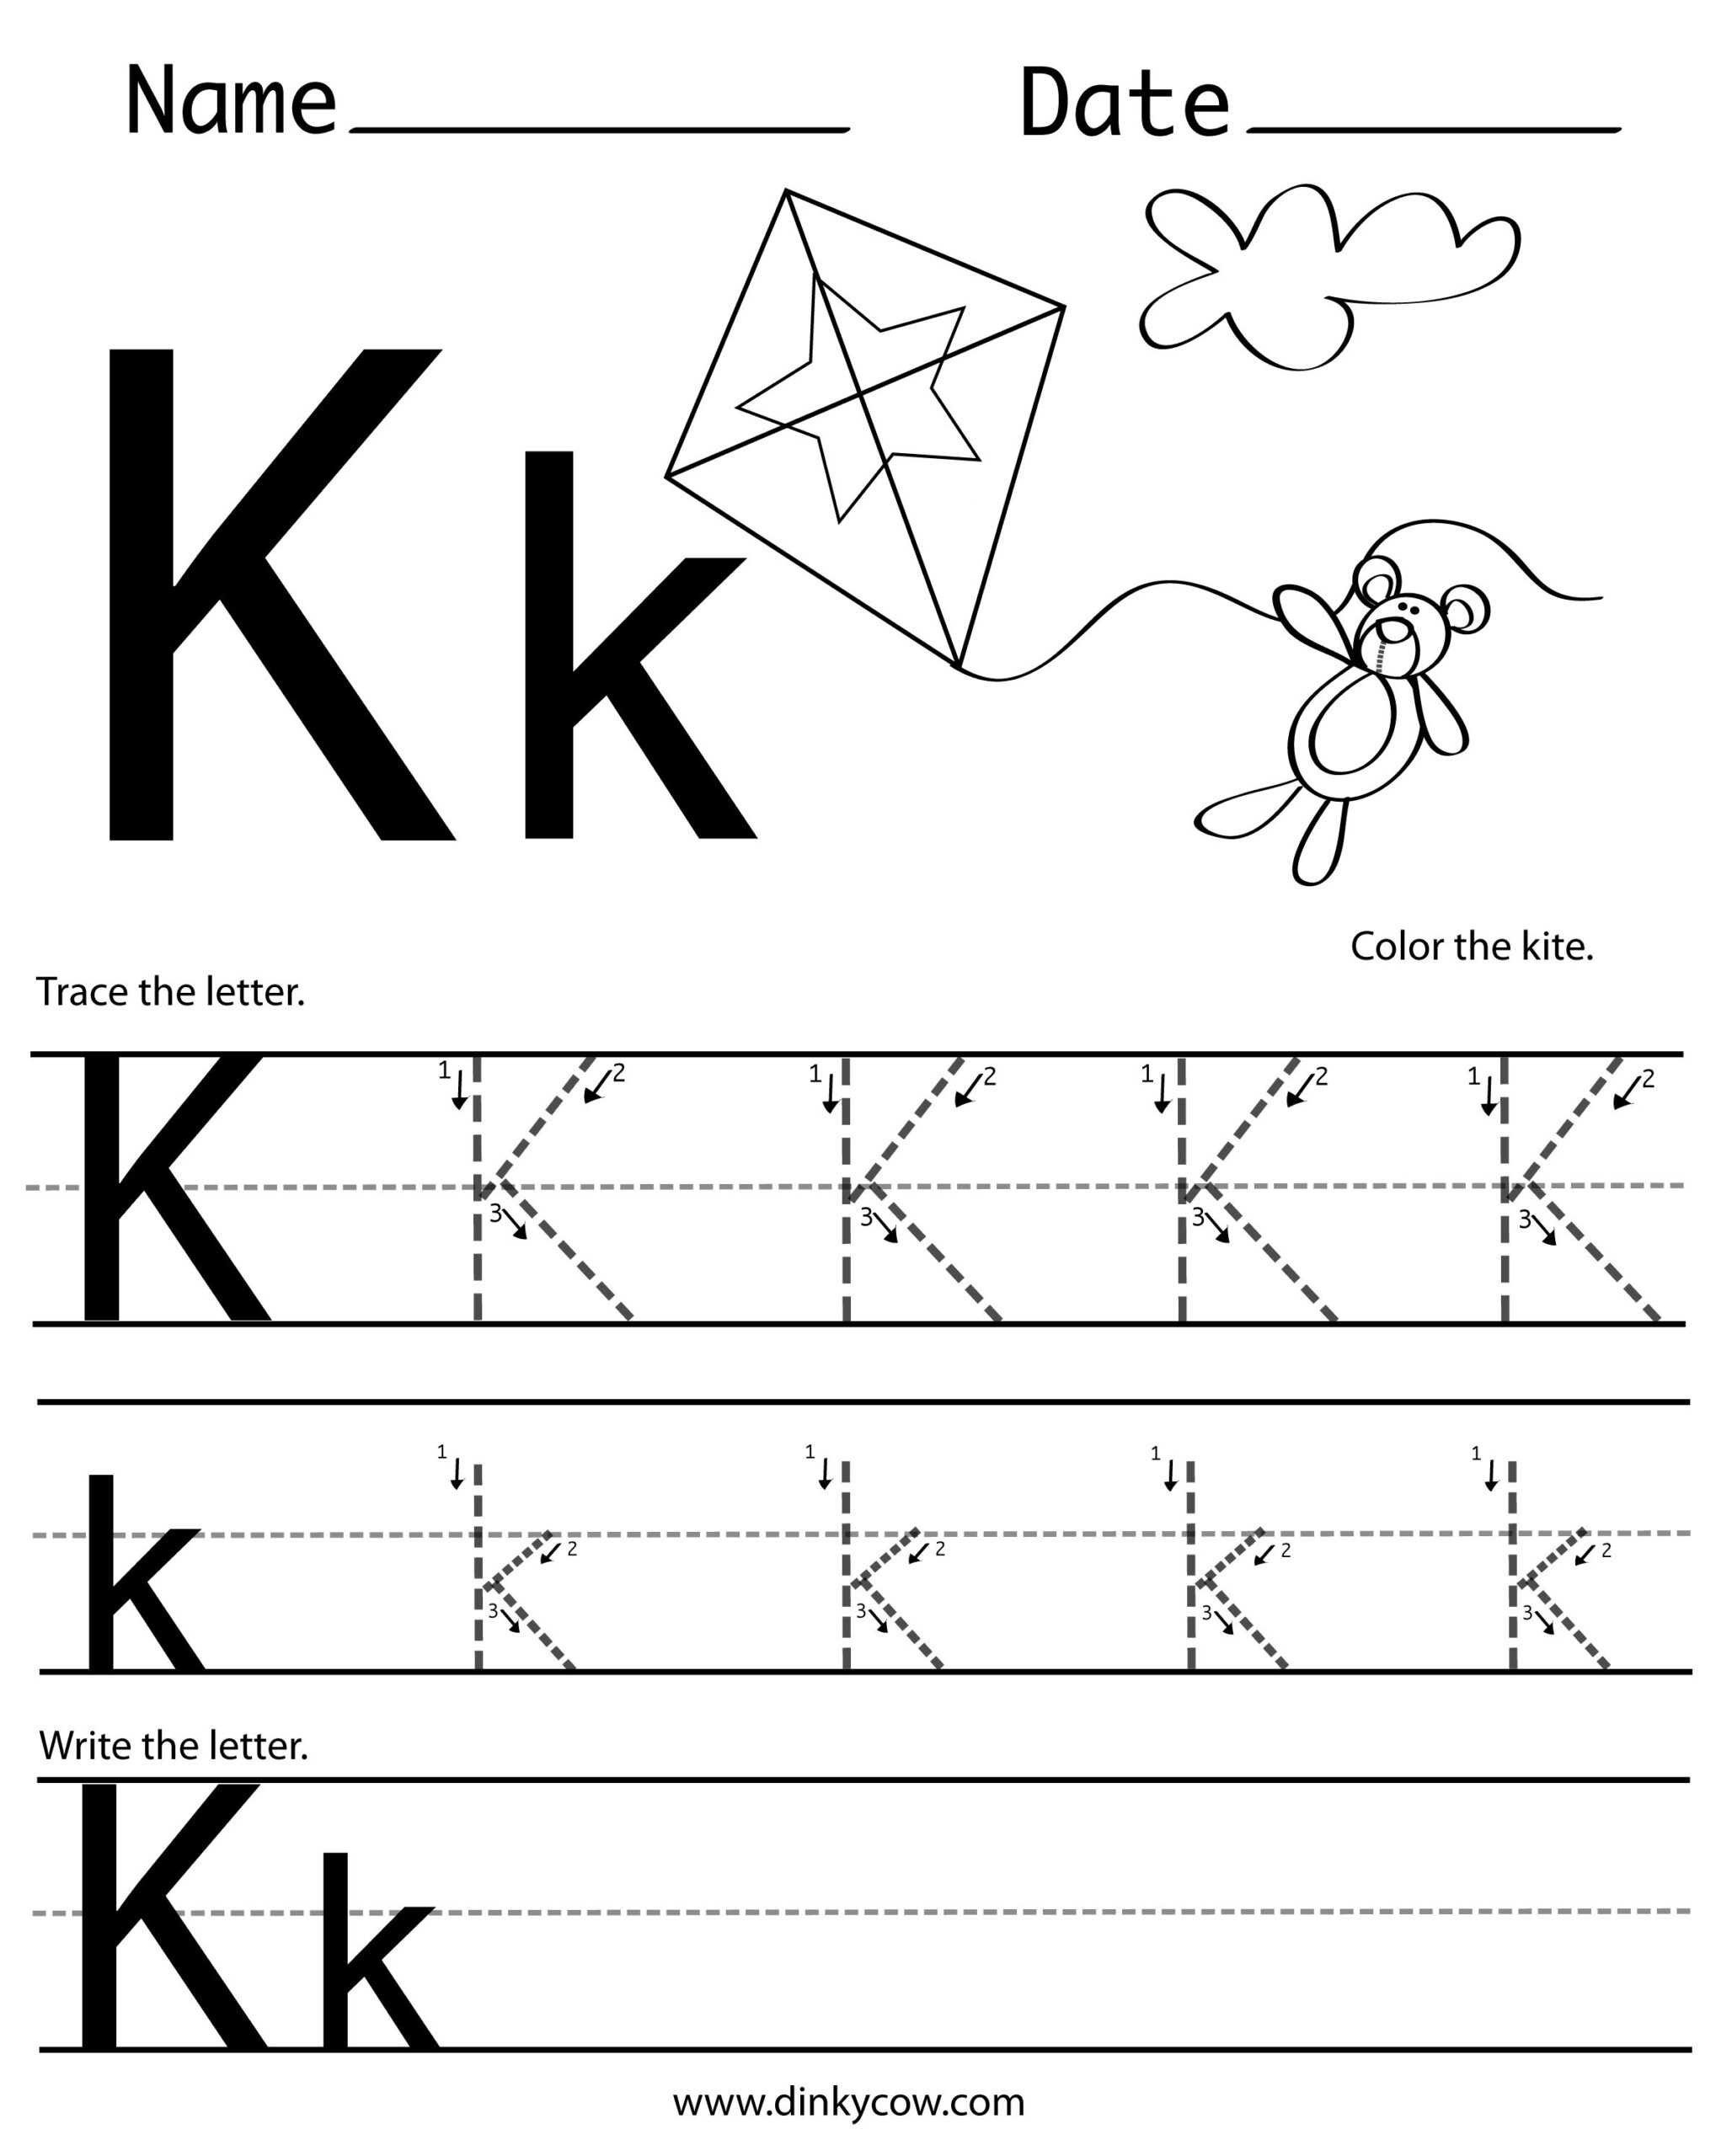 k letter tracing alphabetworksheetsfreecom